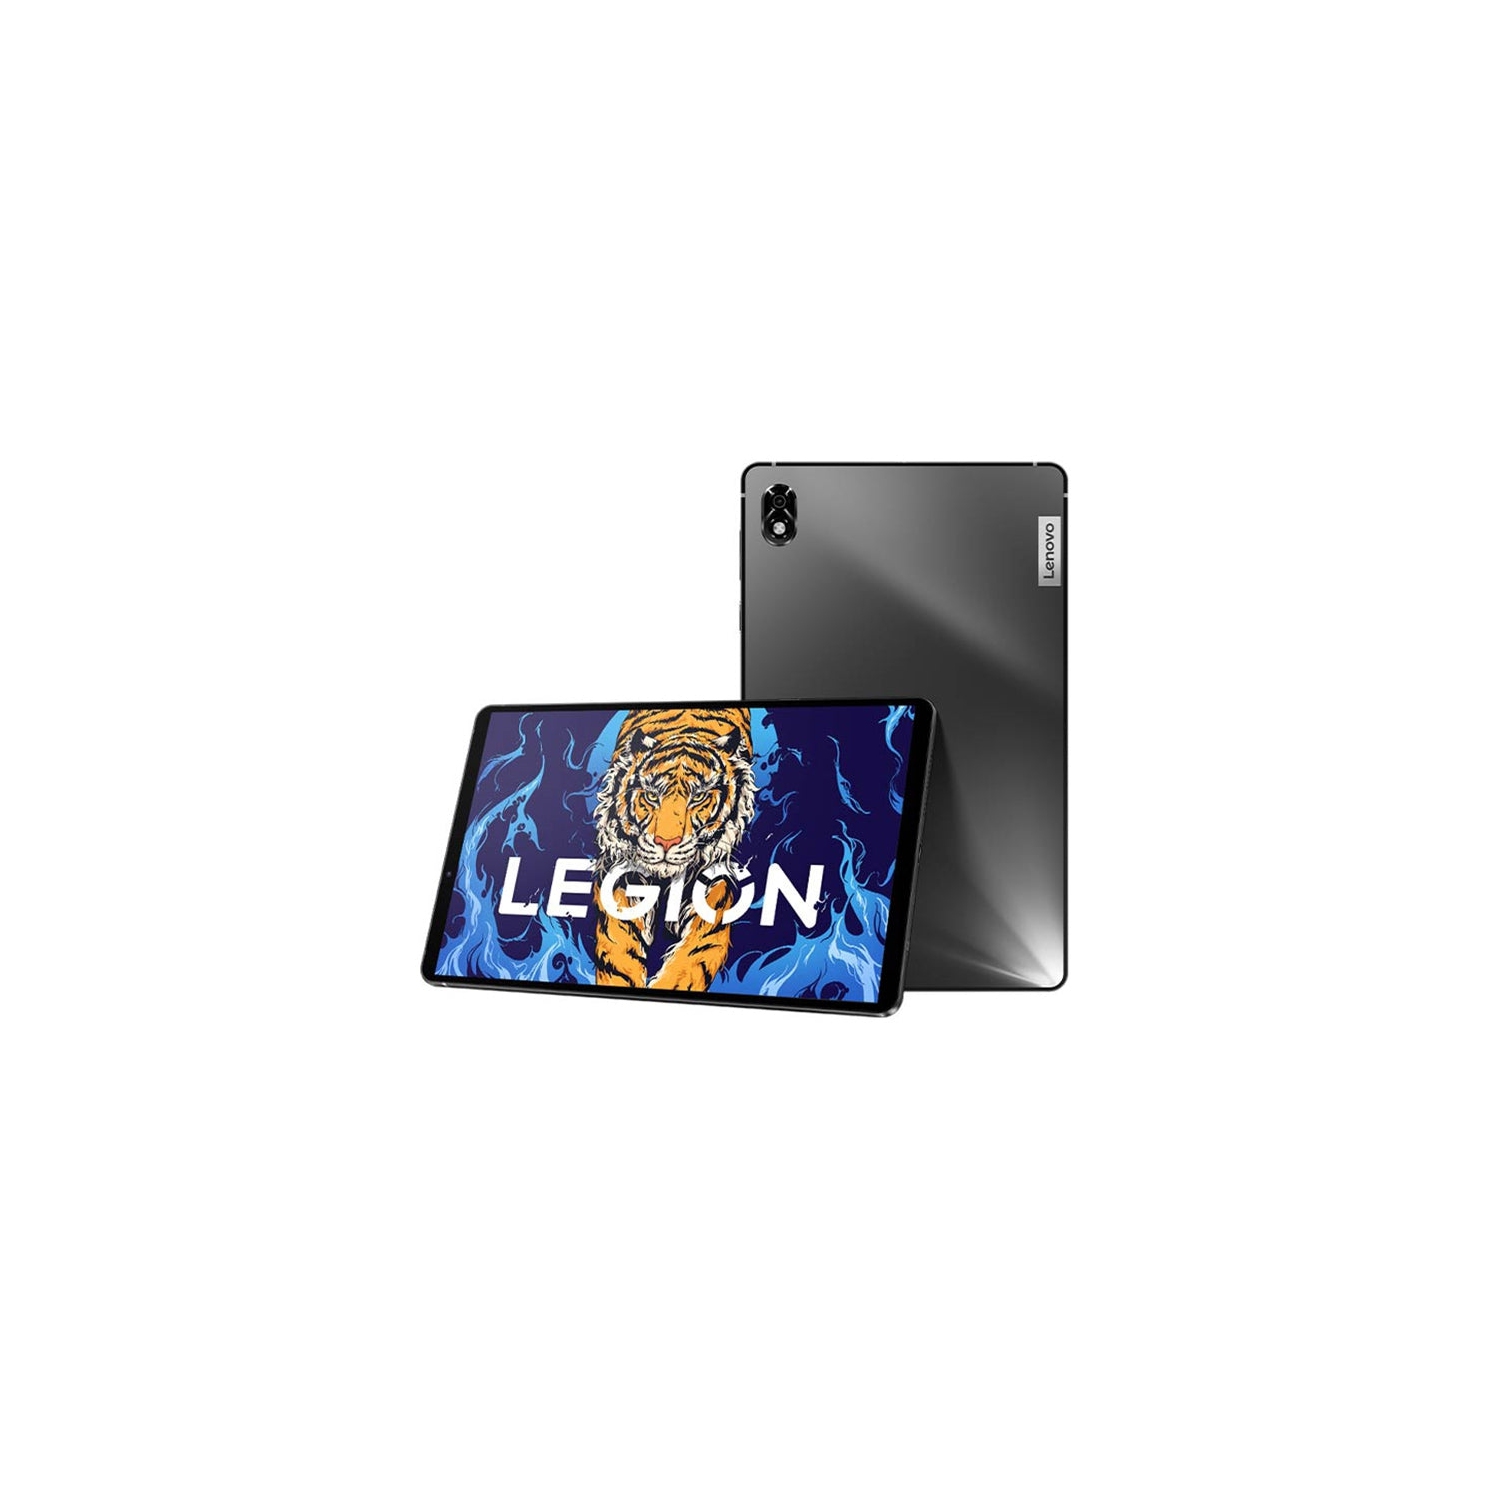 Lenovo LEGION Y700 Gaming Tablet TB-9707F, 8.8 inch, 8GB+128GB, Support Dual Band WiFi & Bluetooth, US Plug(Titanium C..